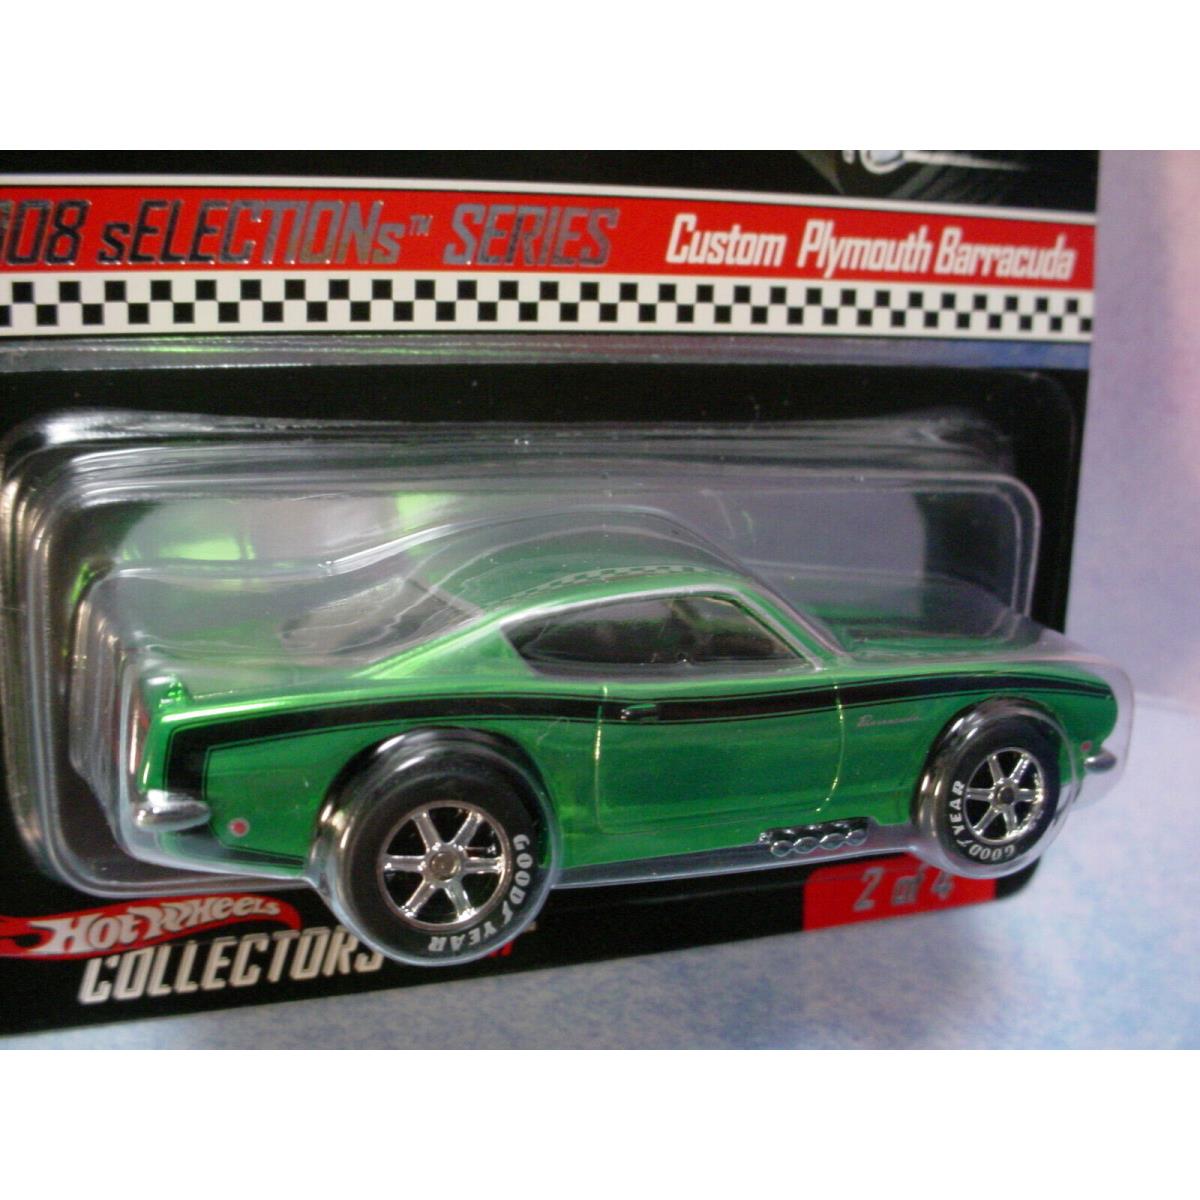 2008 Hot Wheels Rlc Selections Custom Plymouth Barracuda Green 3122/5592